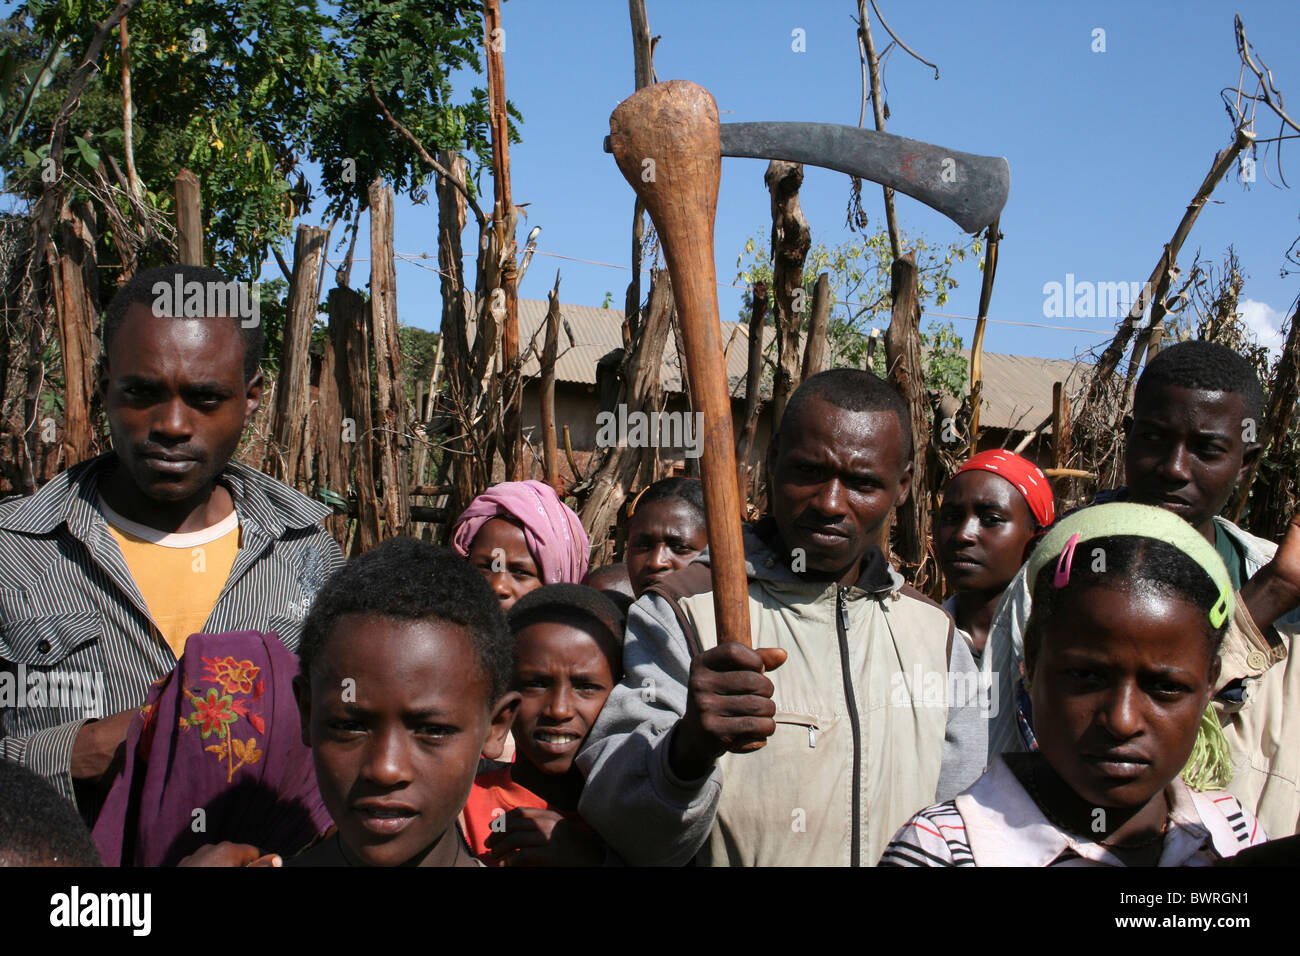 Groupe de tribus Oromo Hagere Mariam, prises en Ethiopie Banque D'Images